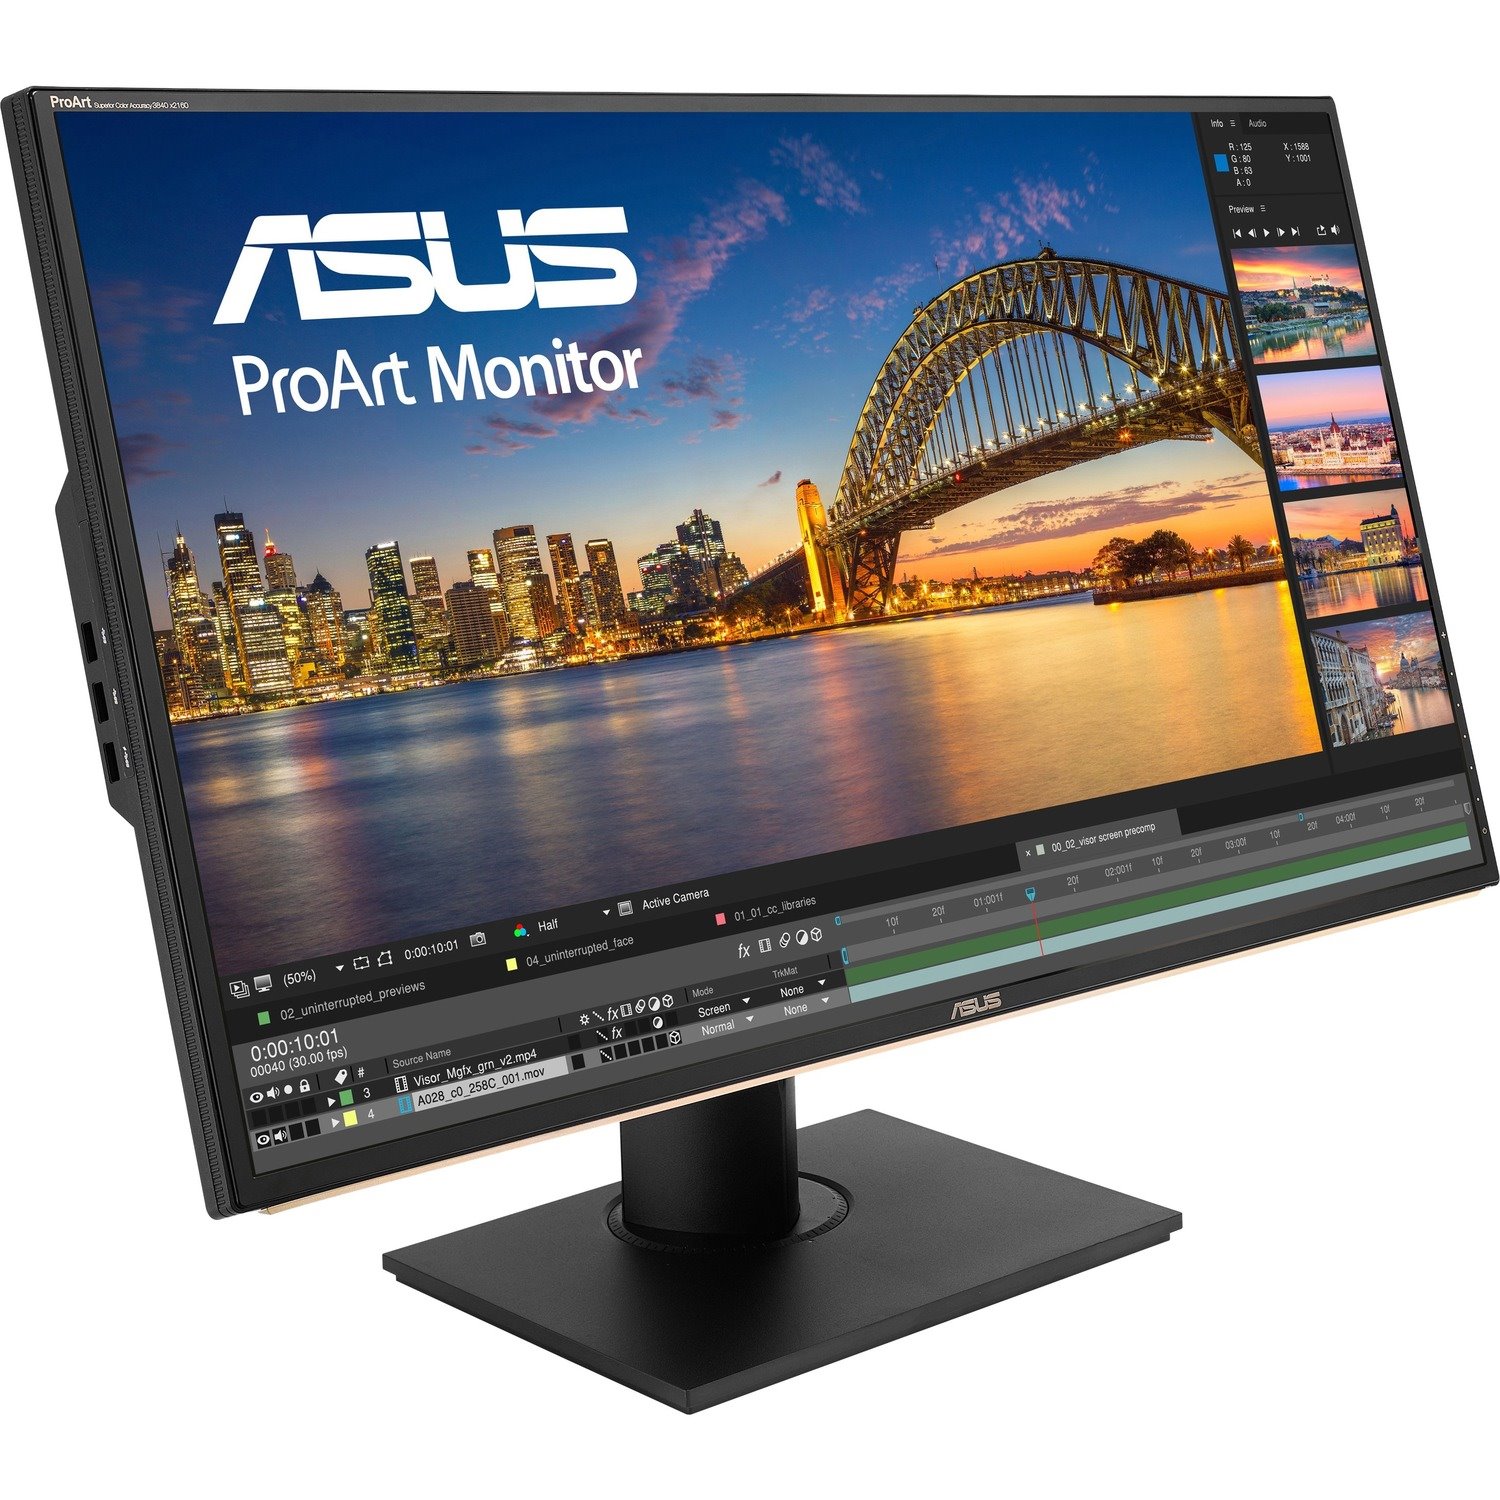 Asus ProArt PA329C 32" 4K UHD LED LCD Monitor - 16:9 - Black